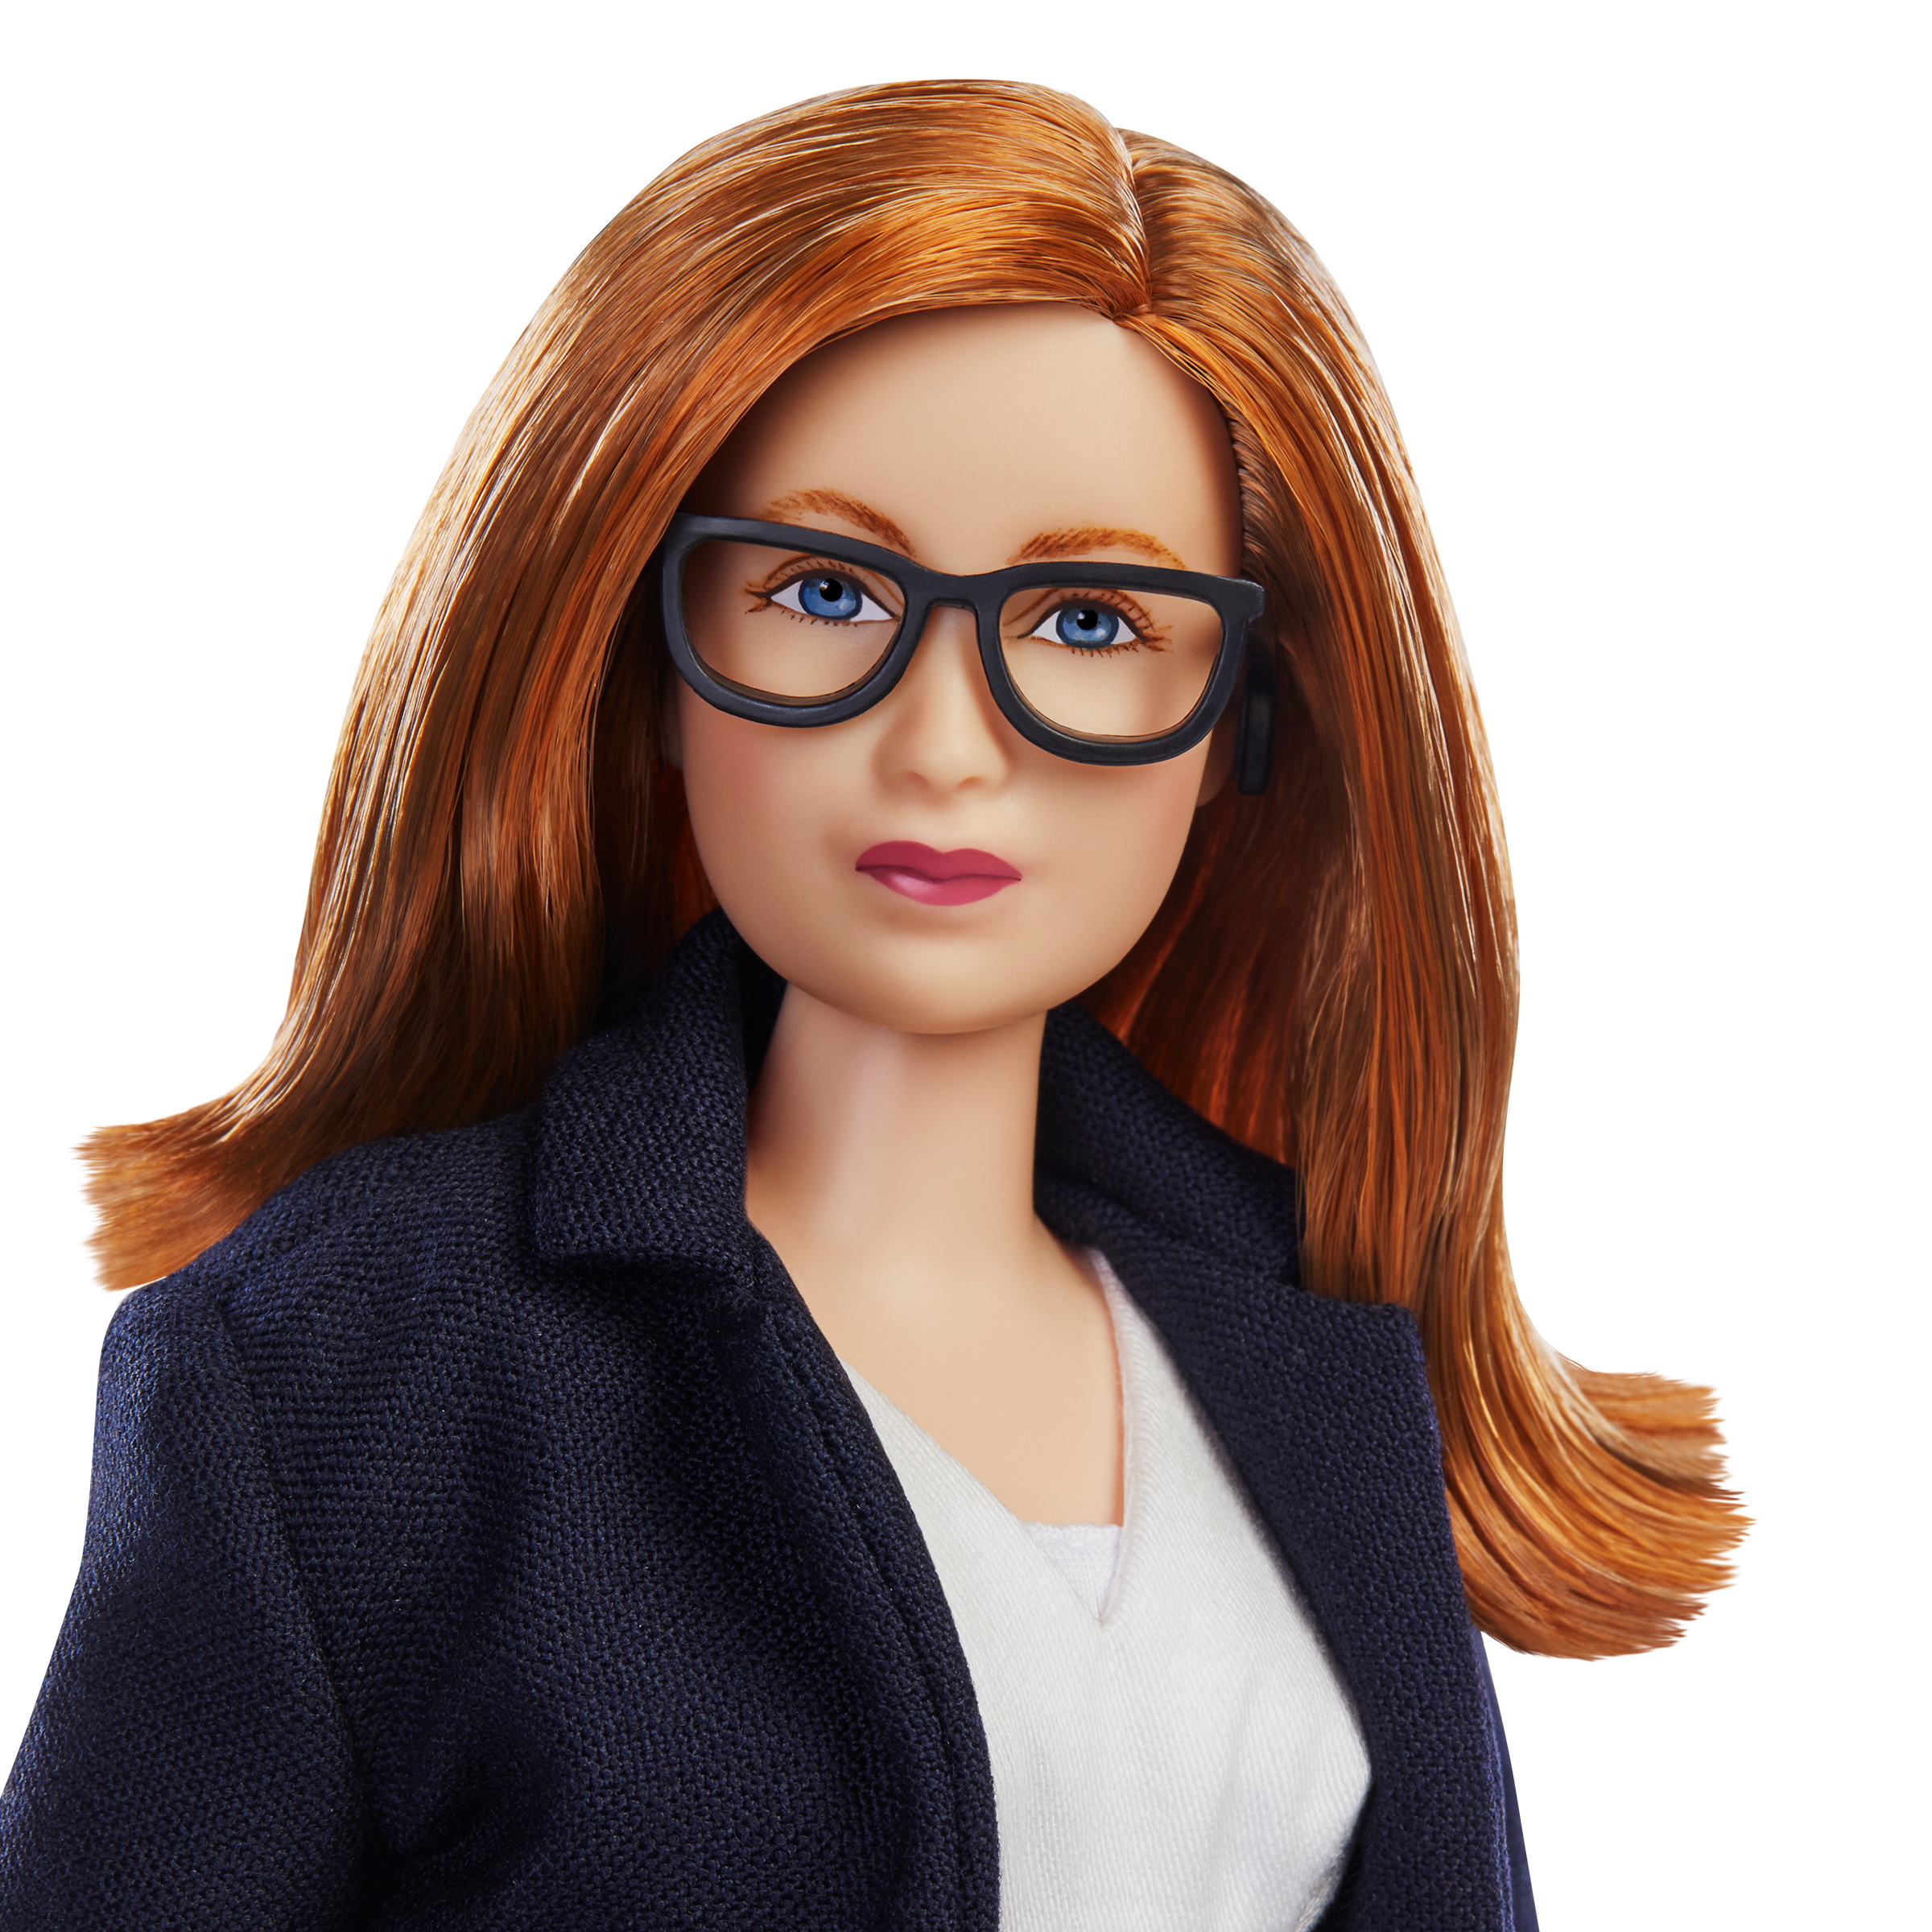 Oxford vaccine developer Gilbert has Barbie doll made in her likeness